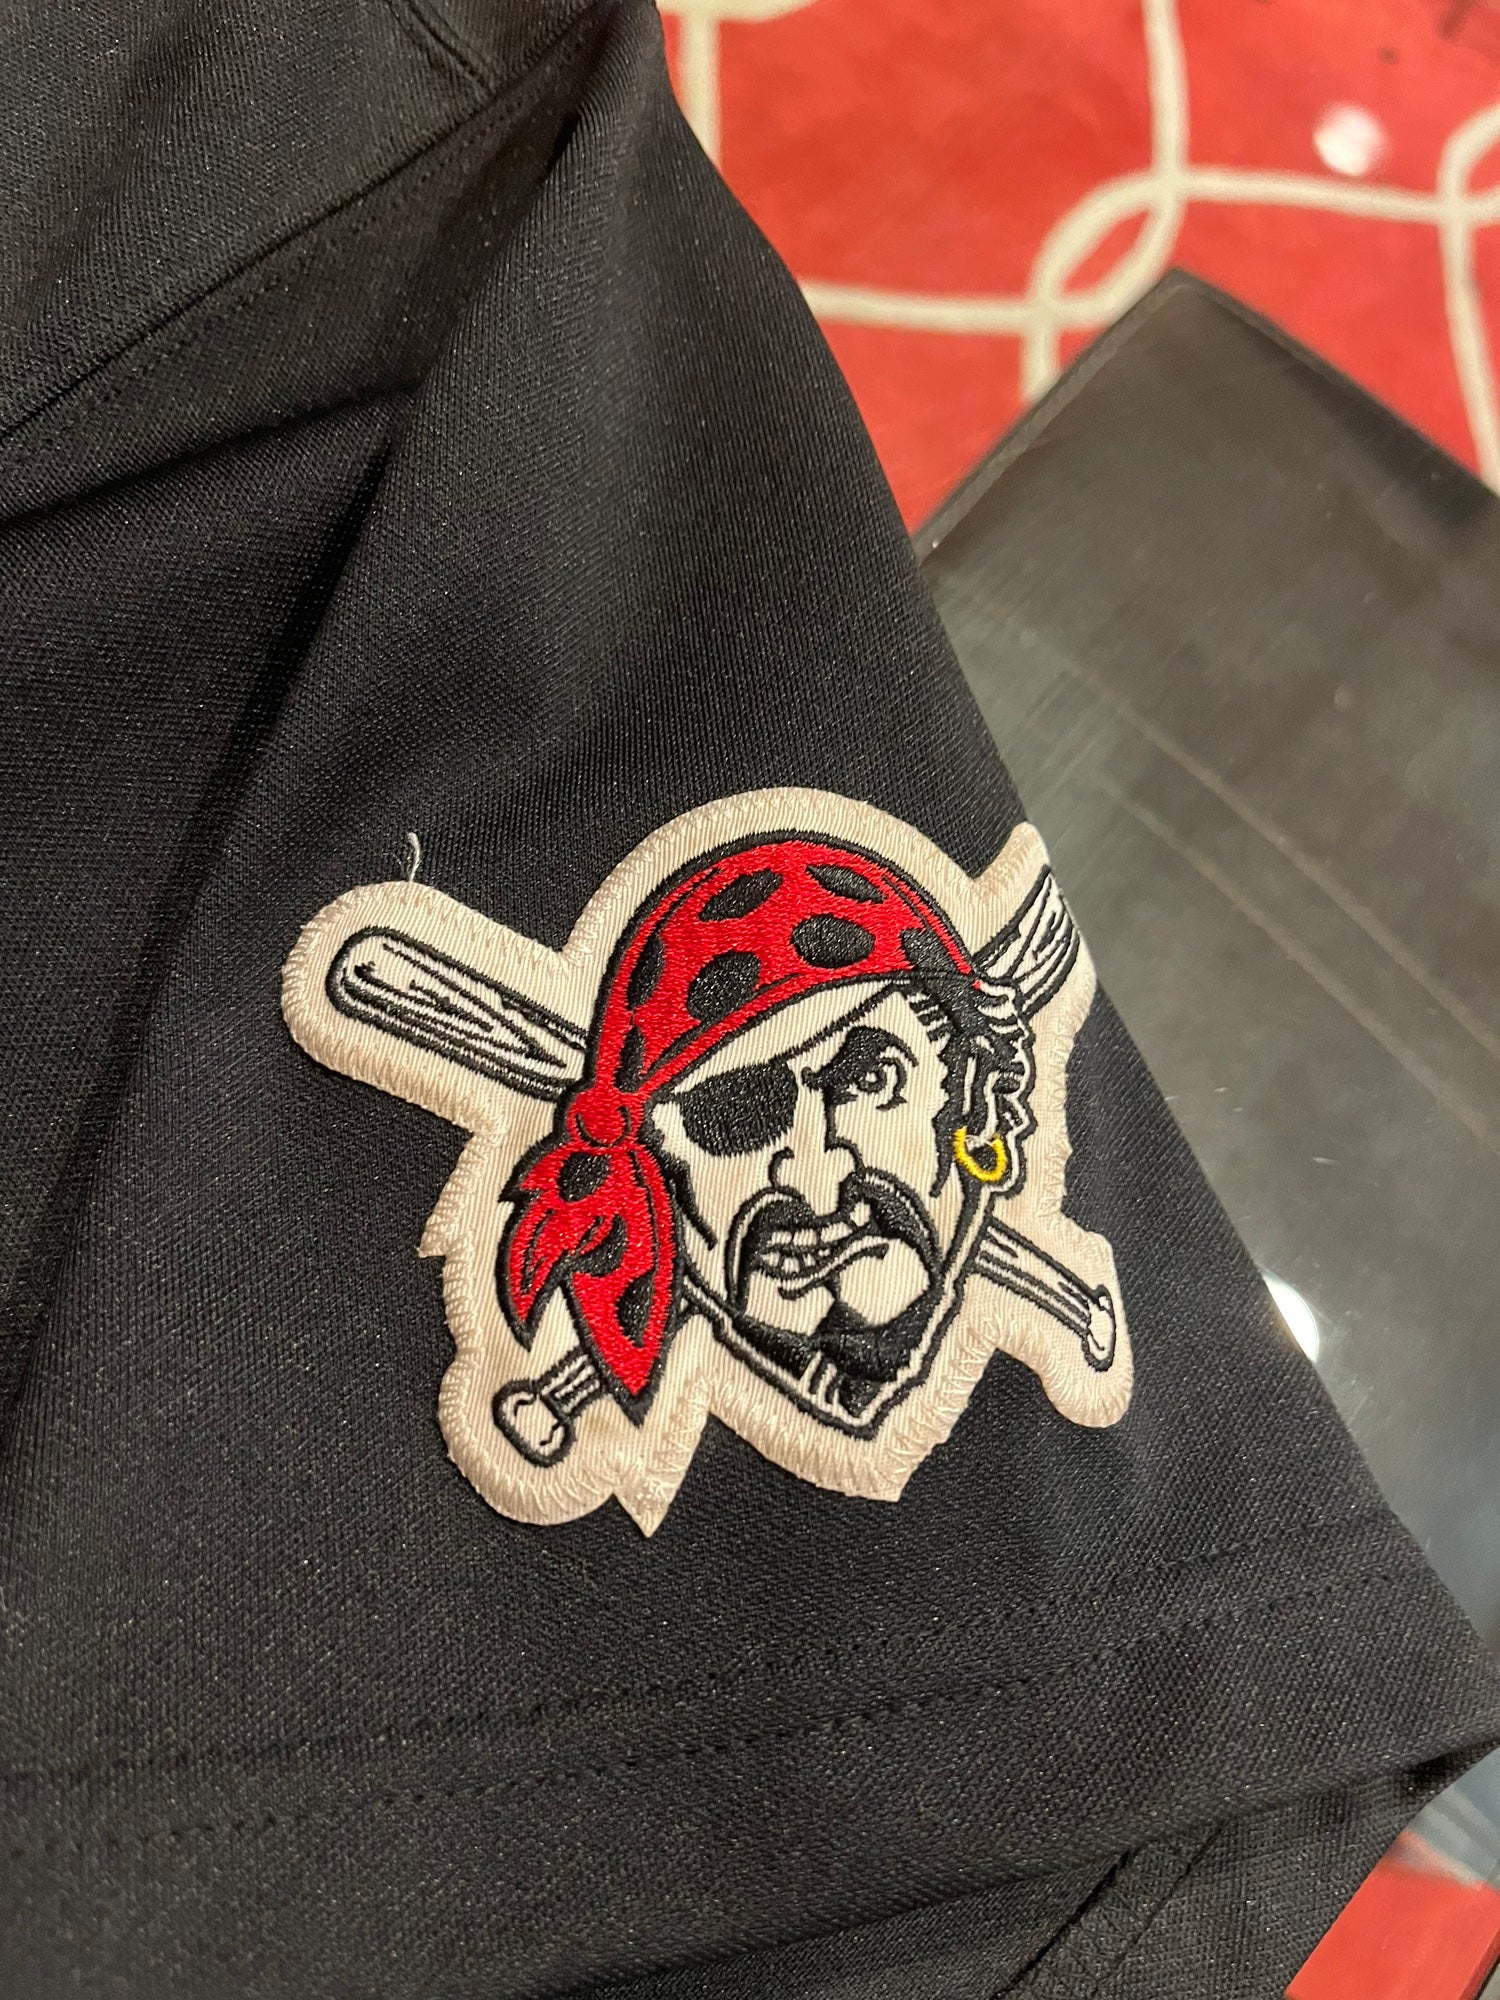 Vintage Pittsburgh Pirates Roberto Clemente Throwback Baseball Jersey